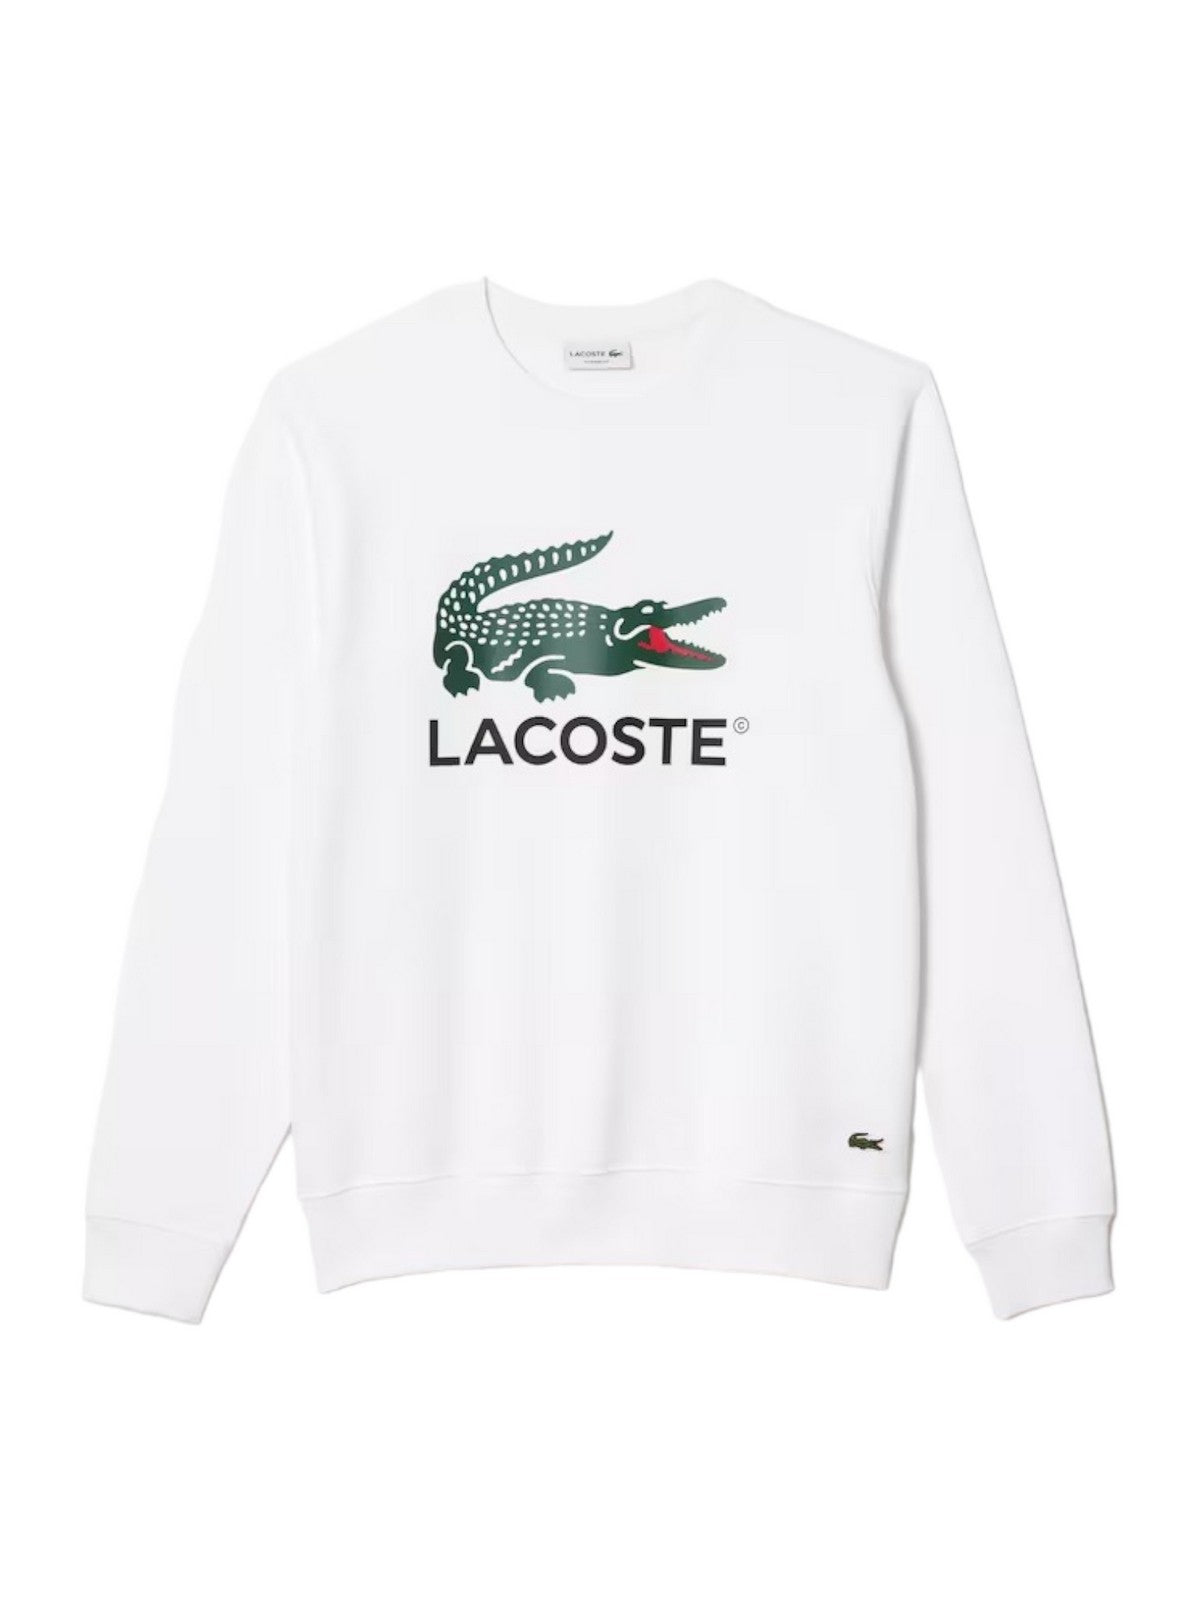 LACOSTE Hommes Sweatshirt SH1281 001 Blanc